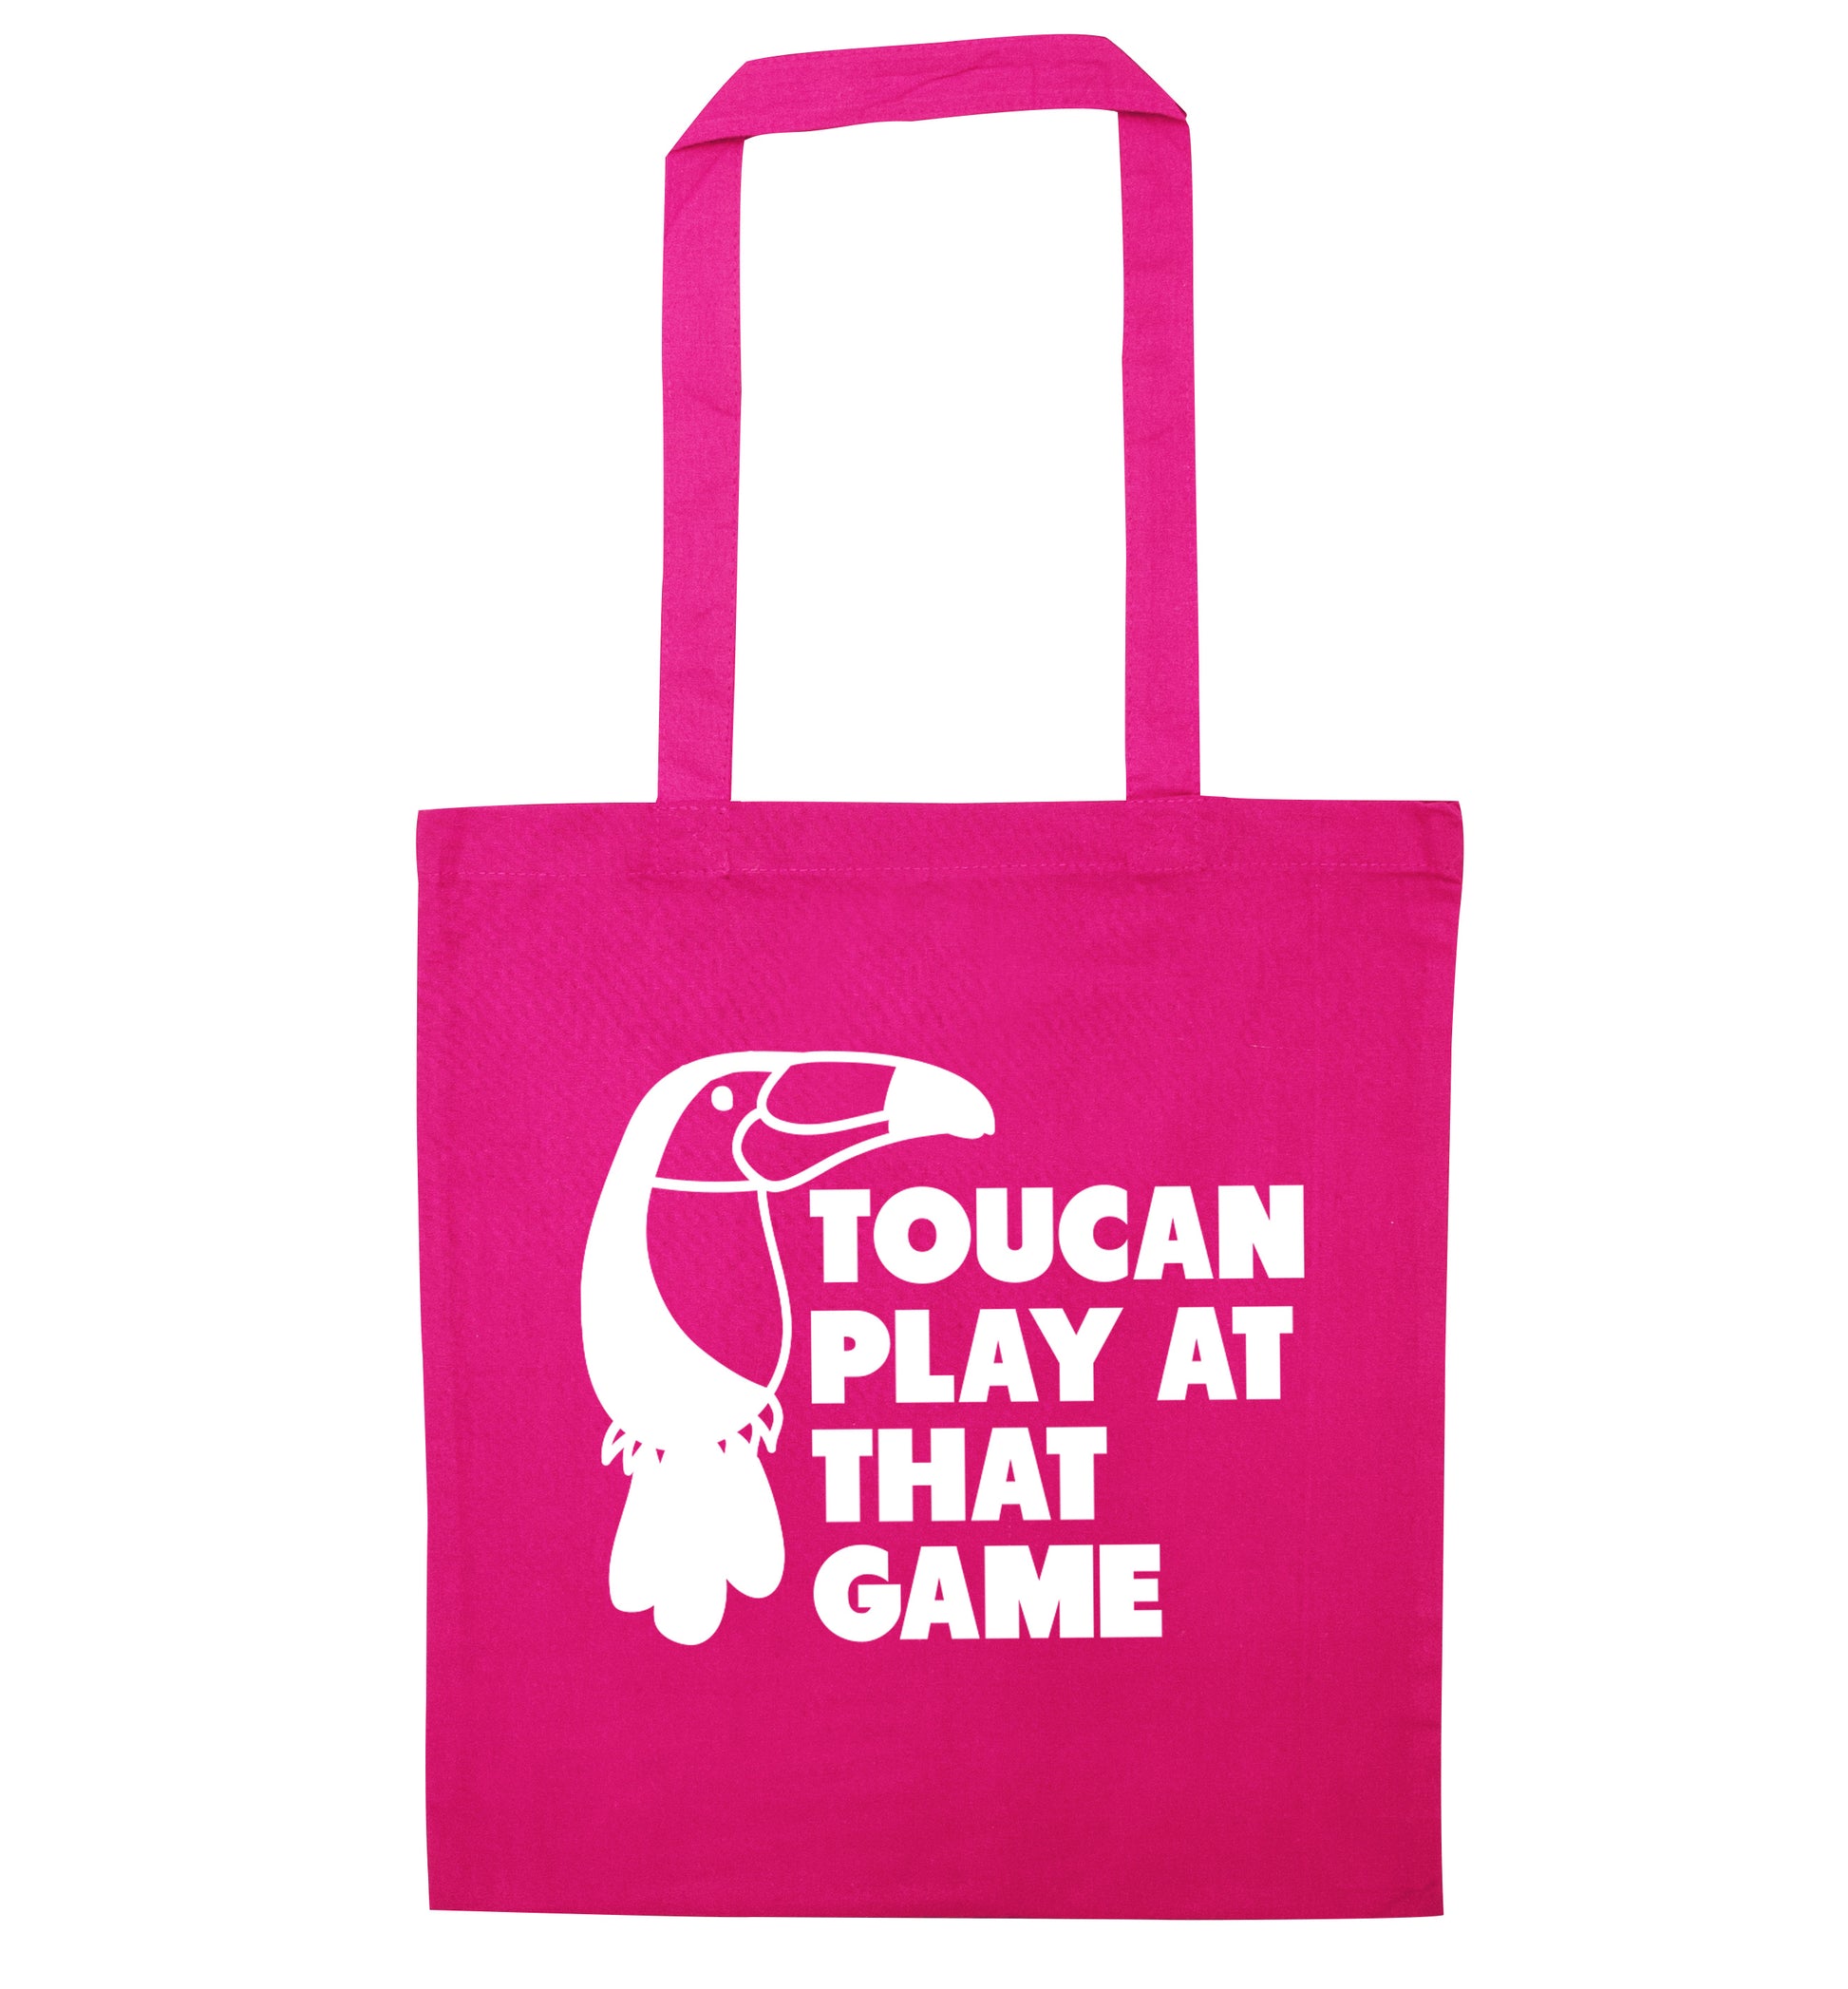 Toucan play at that game pink tote bag